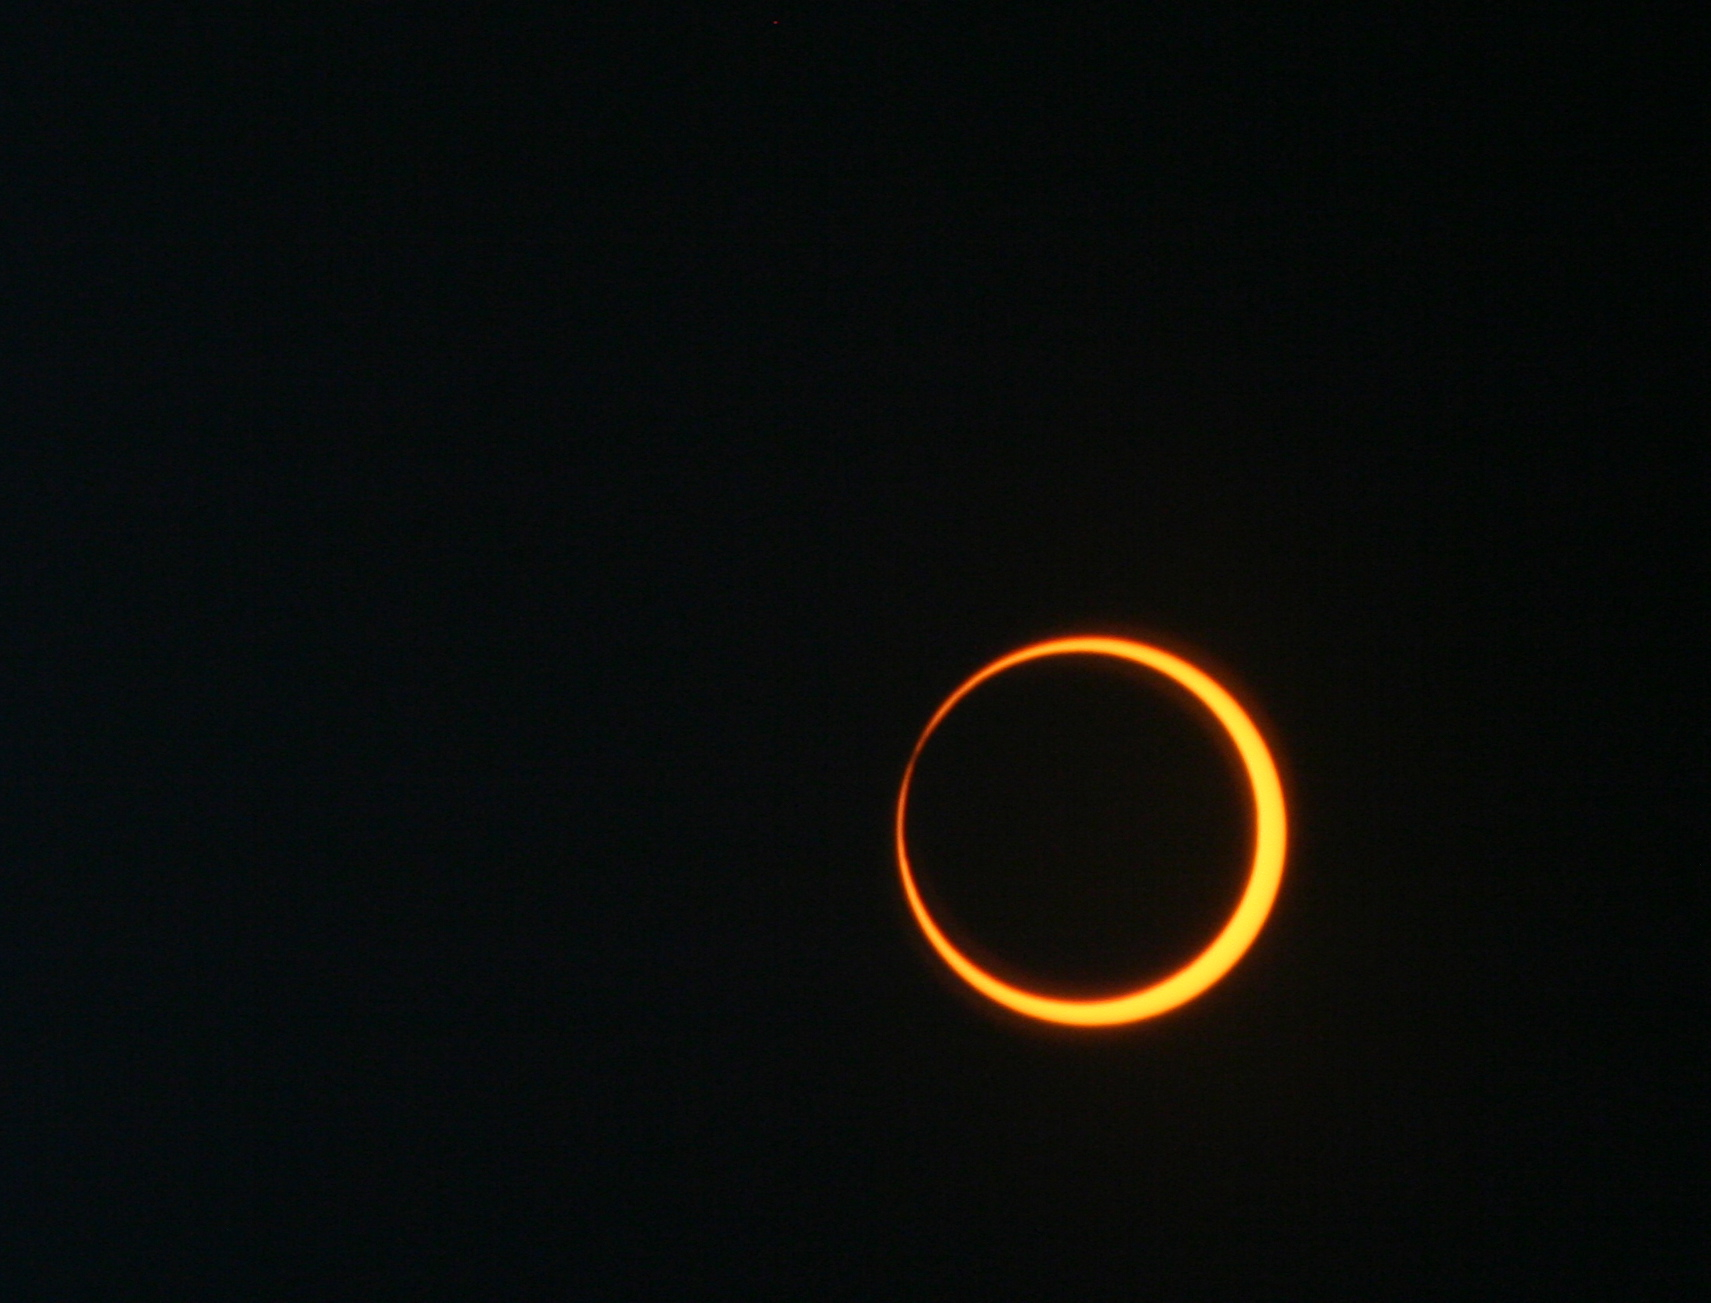 Annular Eclipse 2012 photo. Credit: NASA